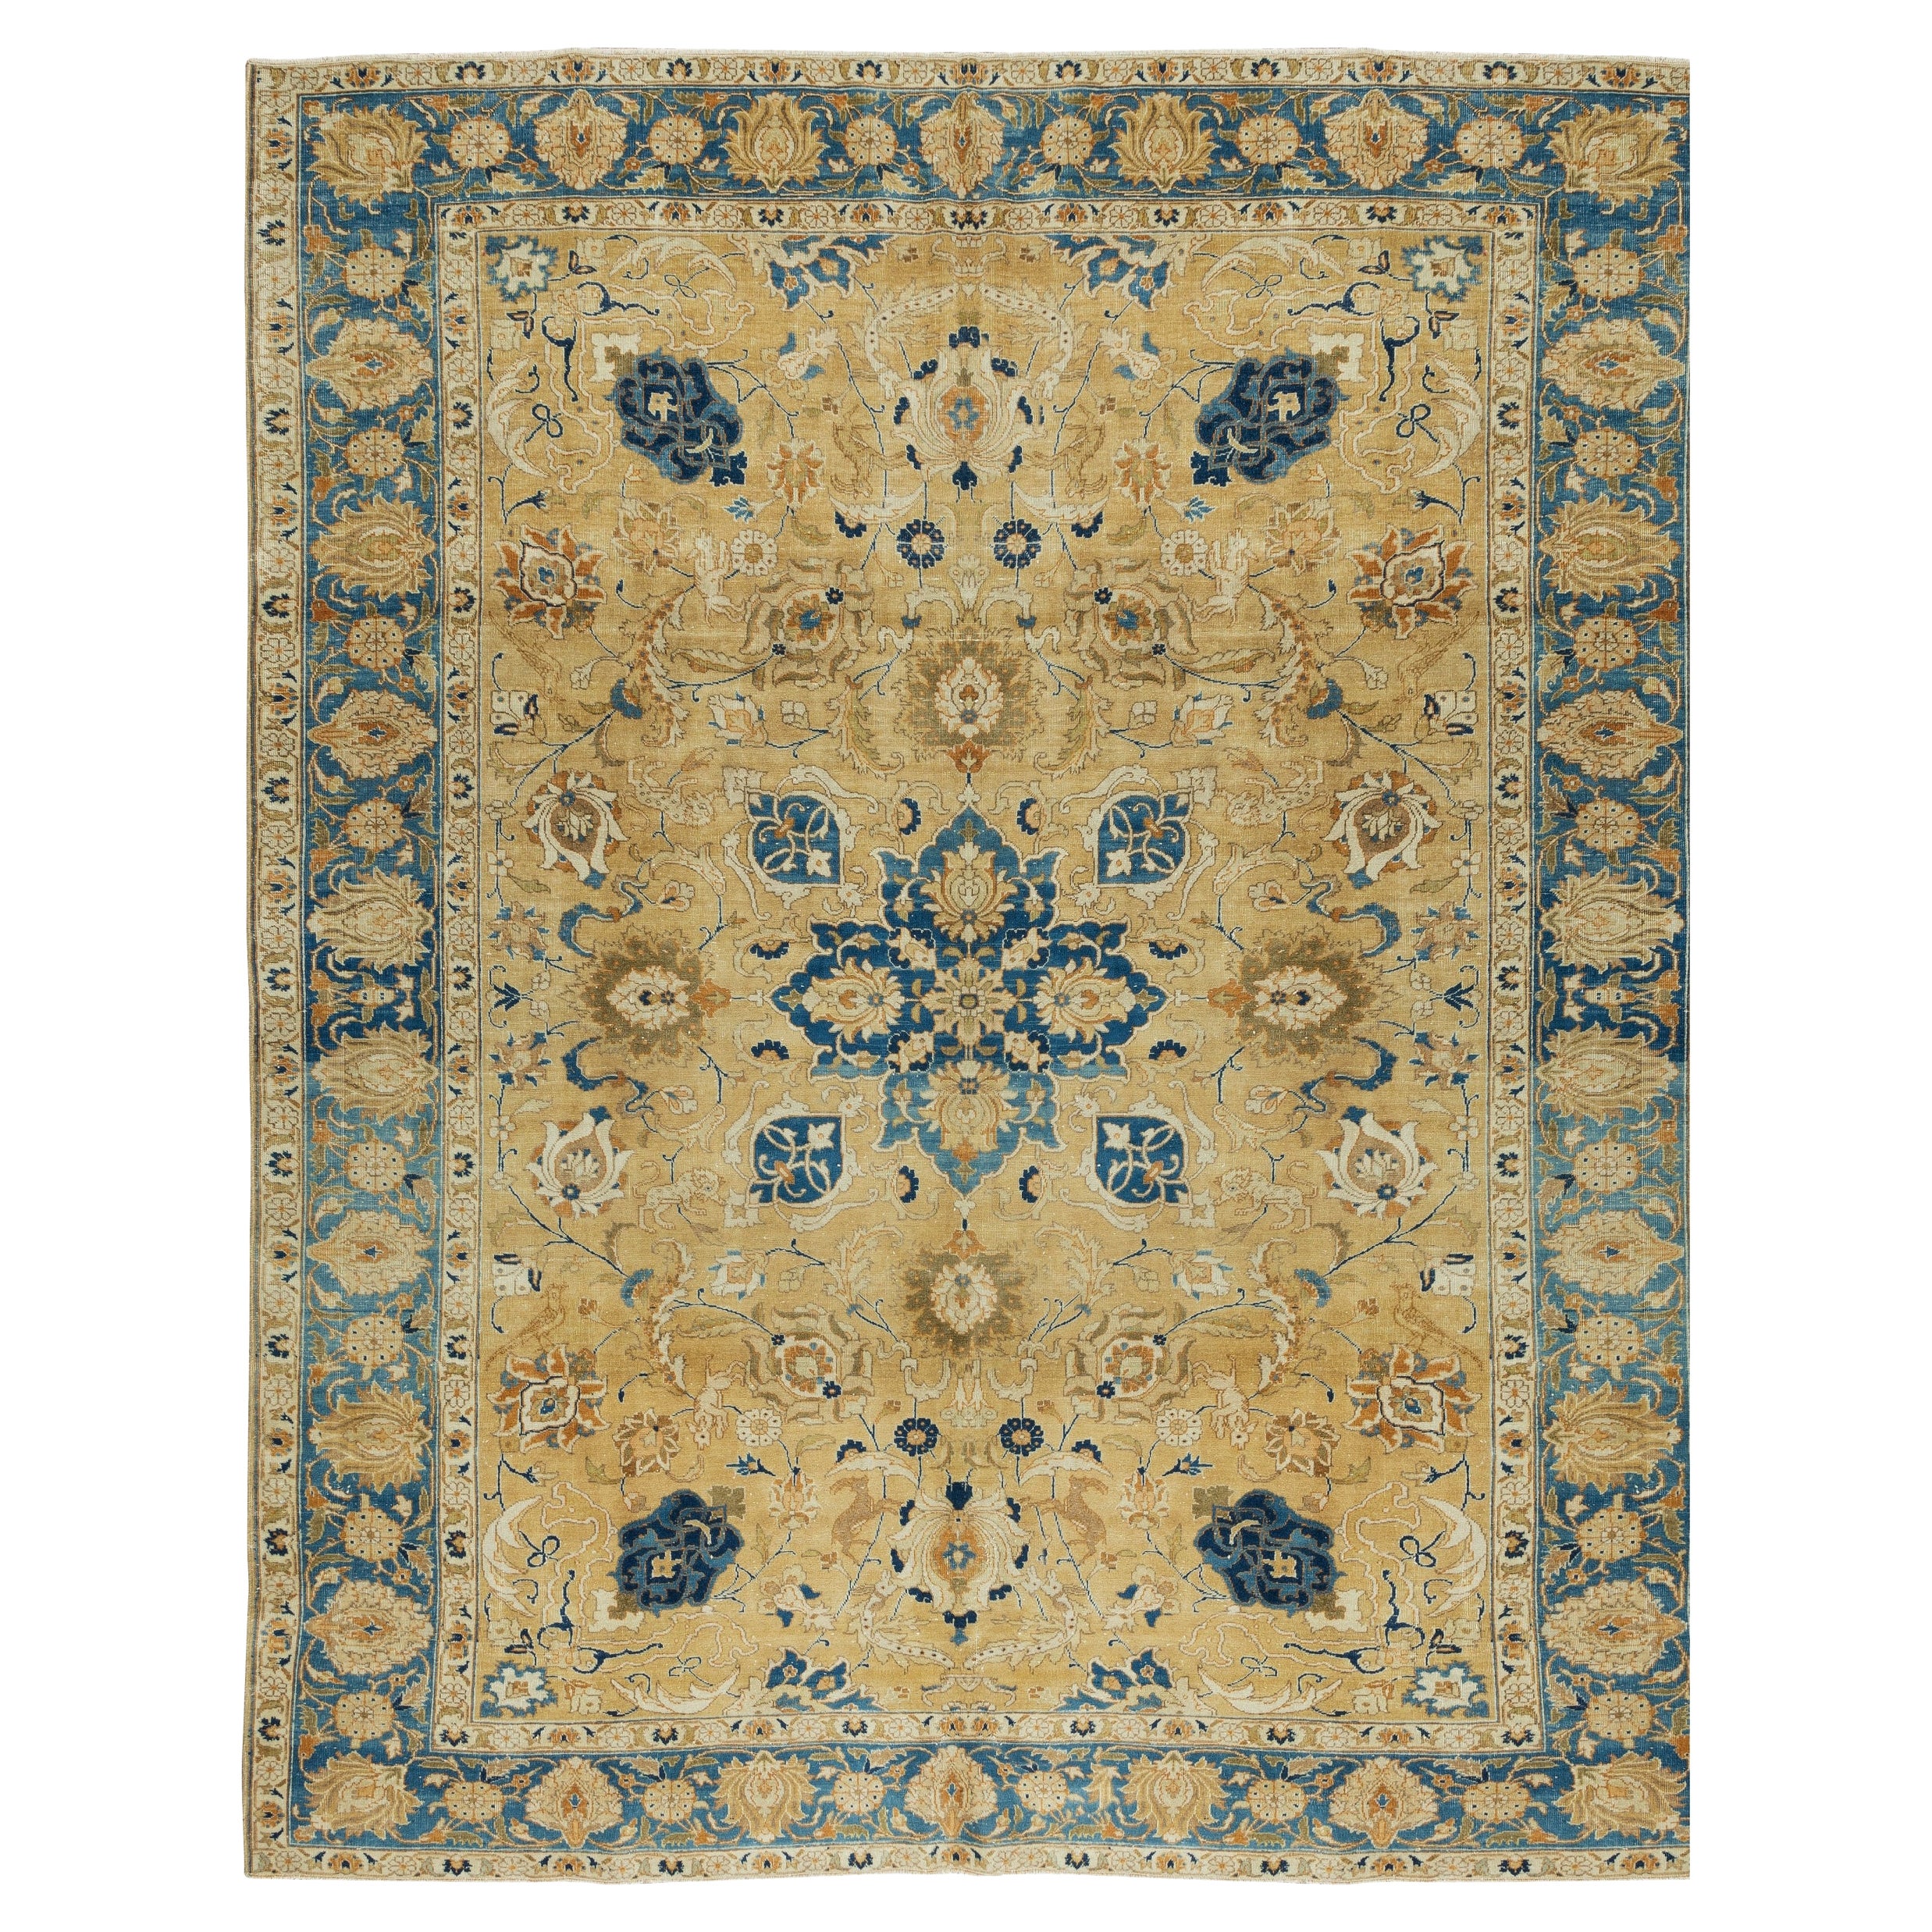 8x11 Ft Hand Knotted Area Rug in Beige & Blue, Vintage Floral Turkish Carpet For Sale